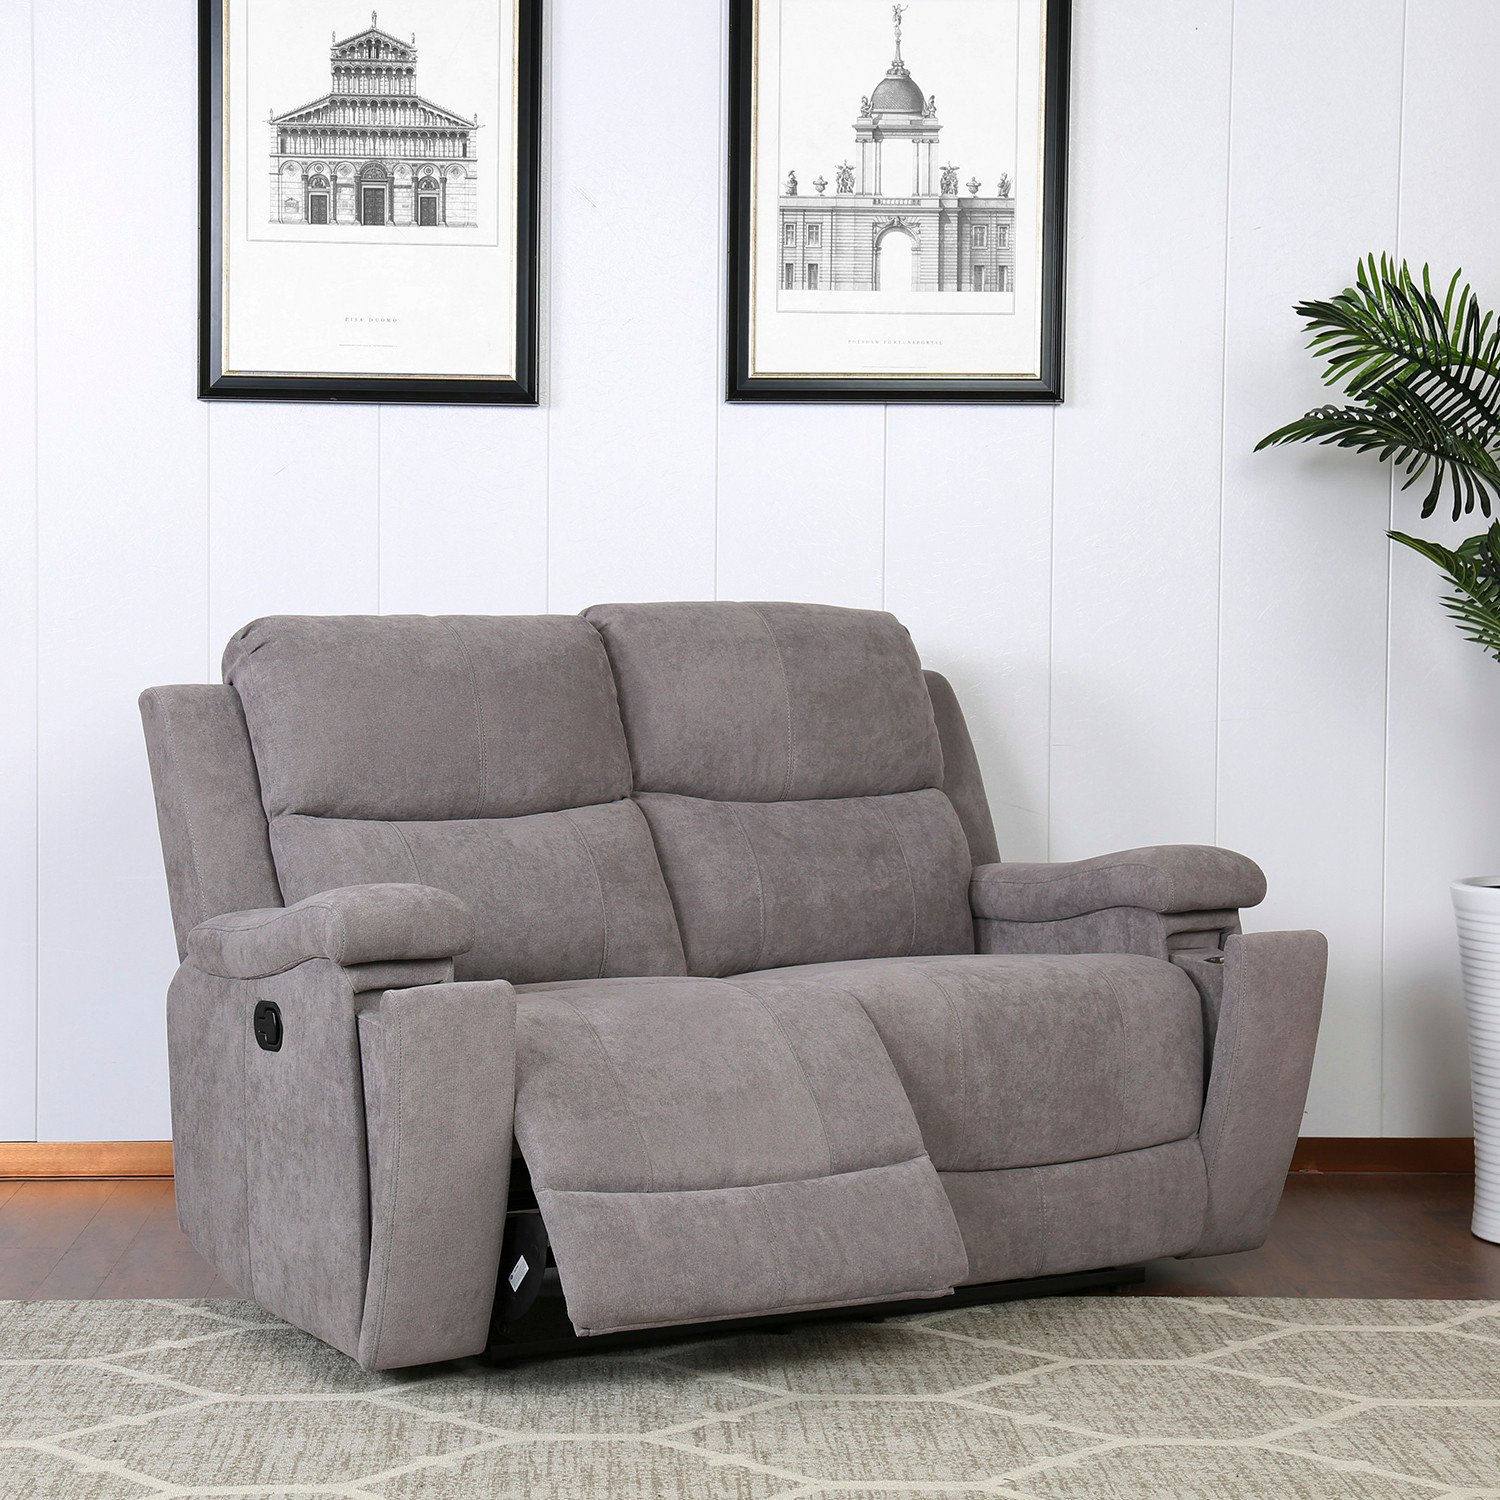 Ledbury 2 Seater Grey Fabric Manual Recliner Sofa Image 4